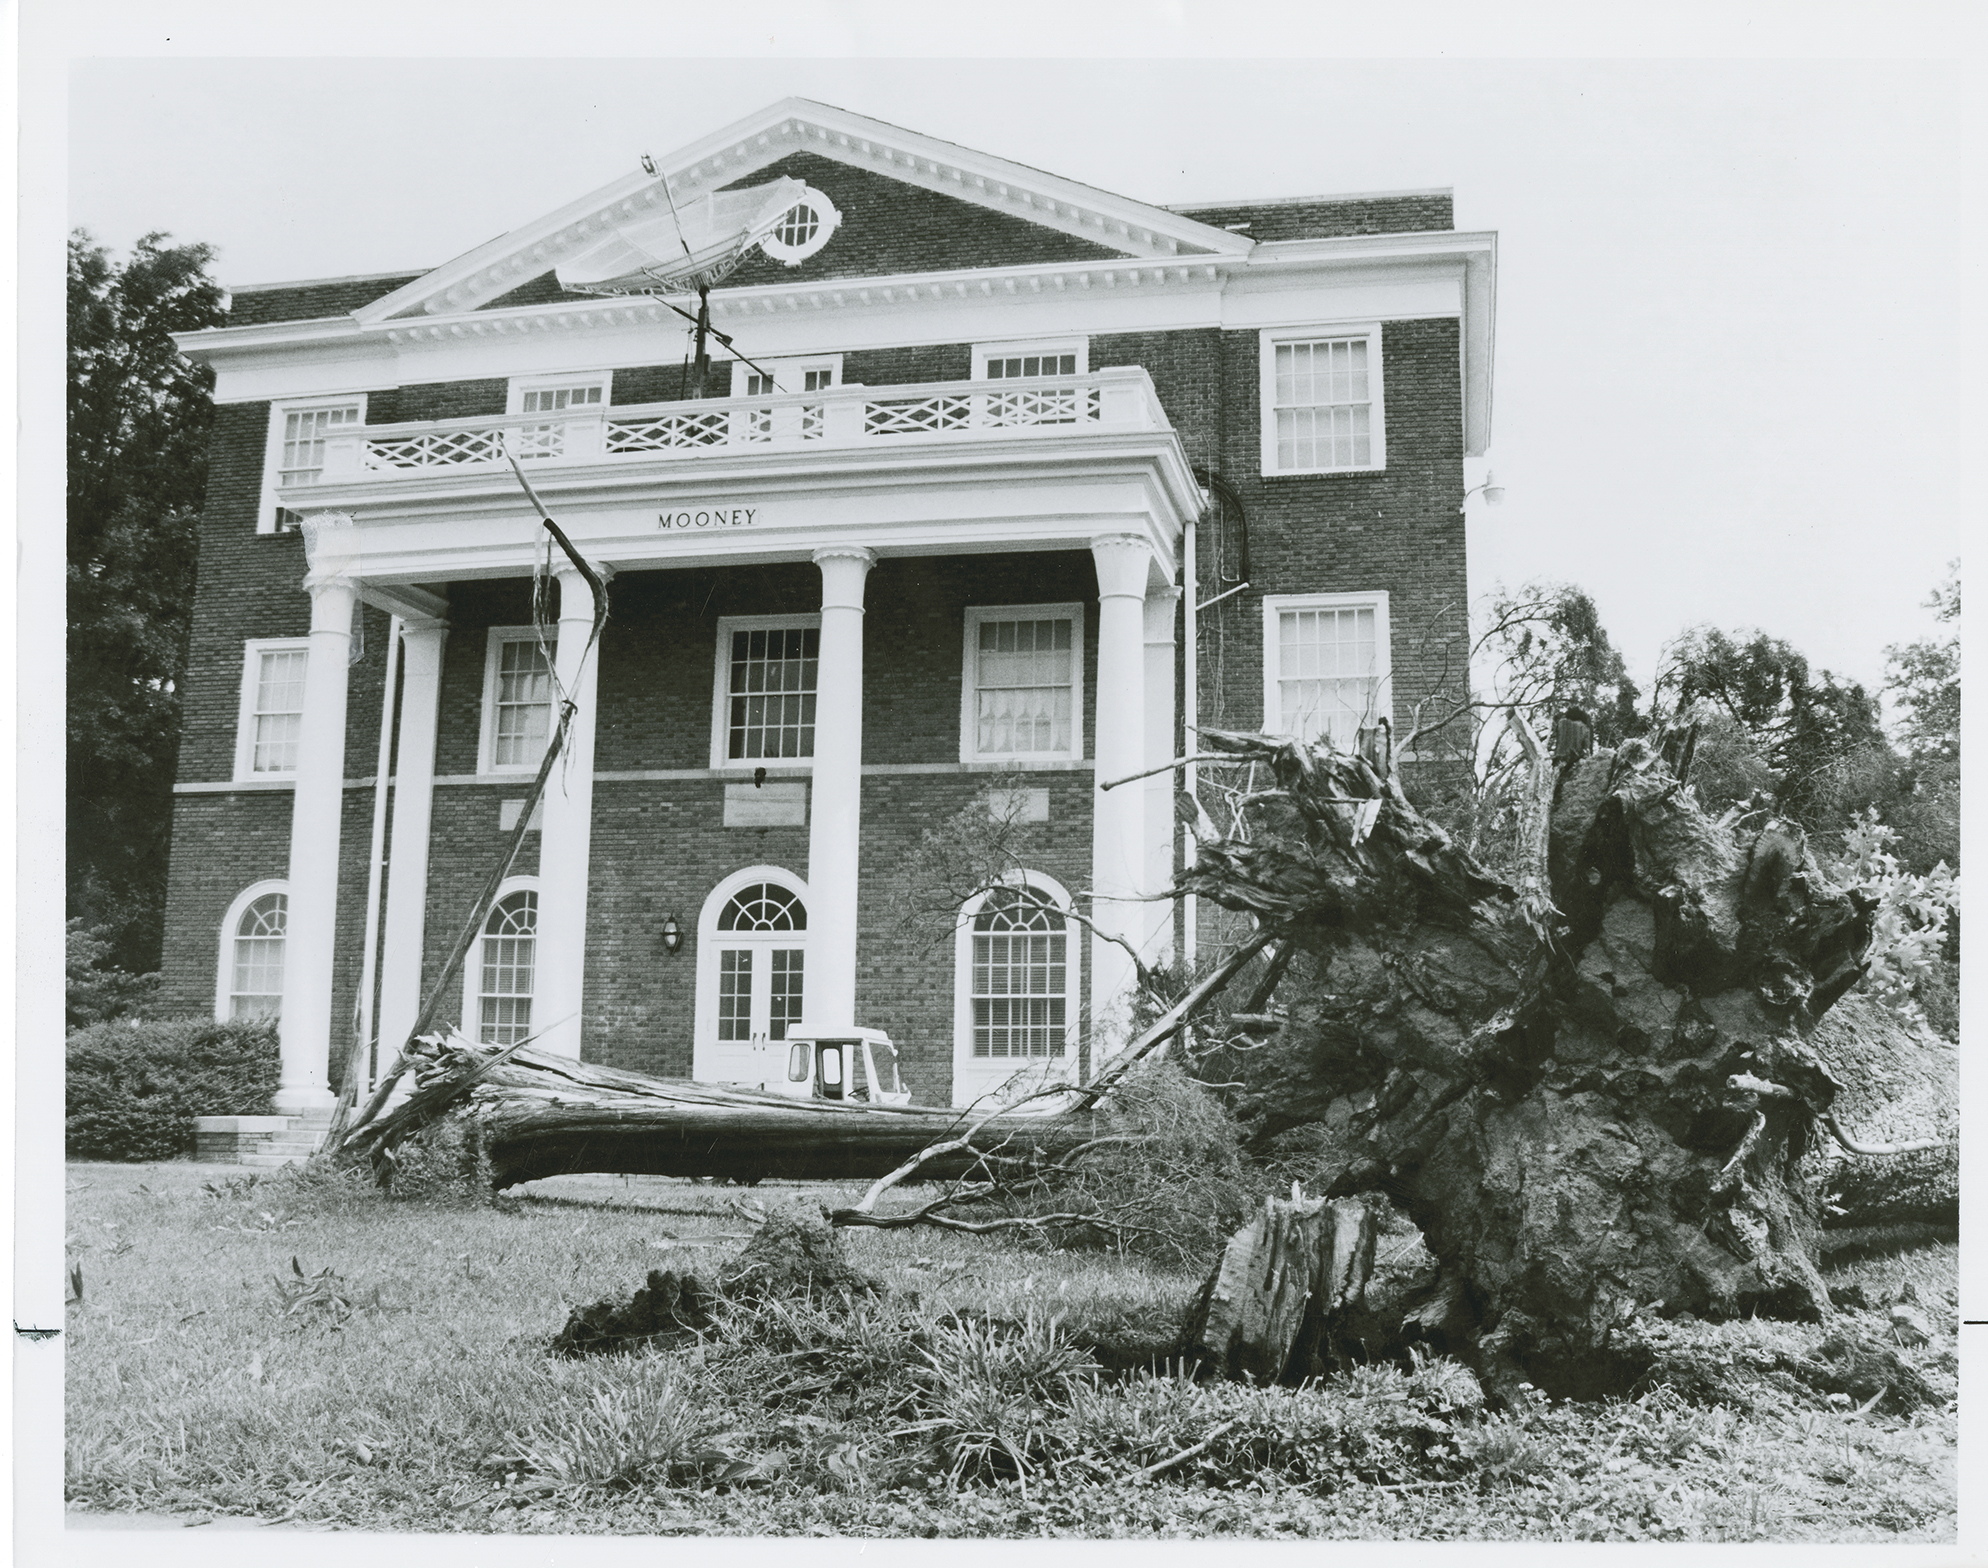 Mooney building and storm damage, June 1989